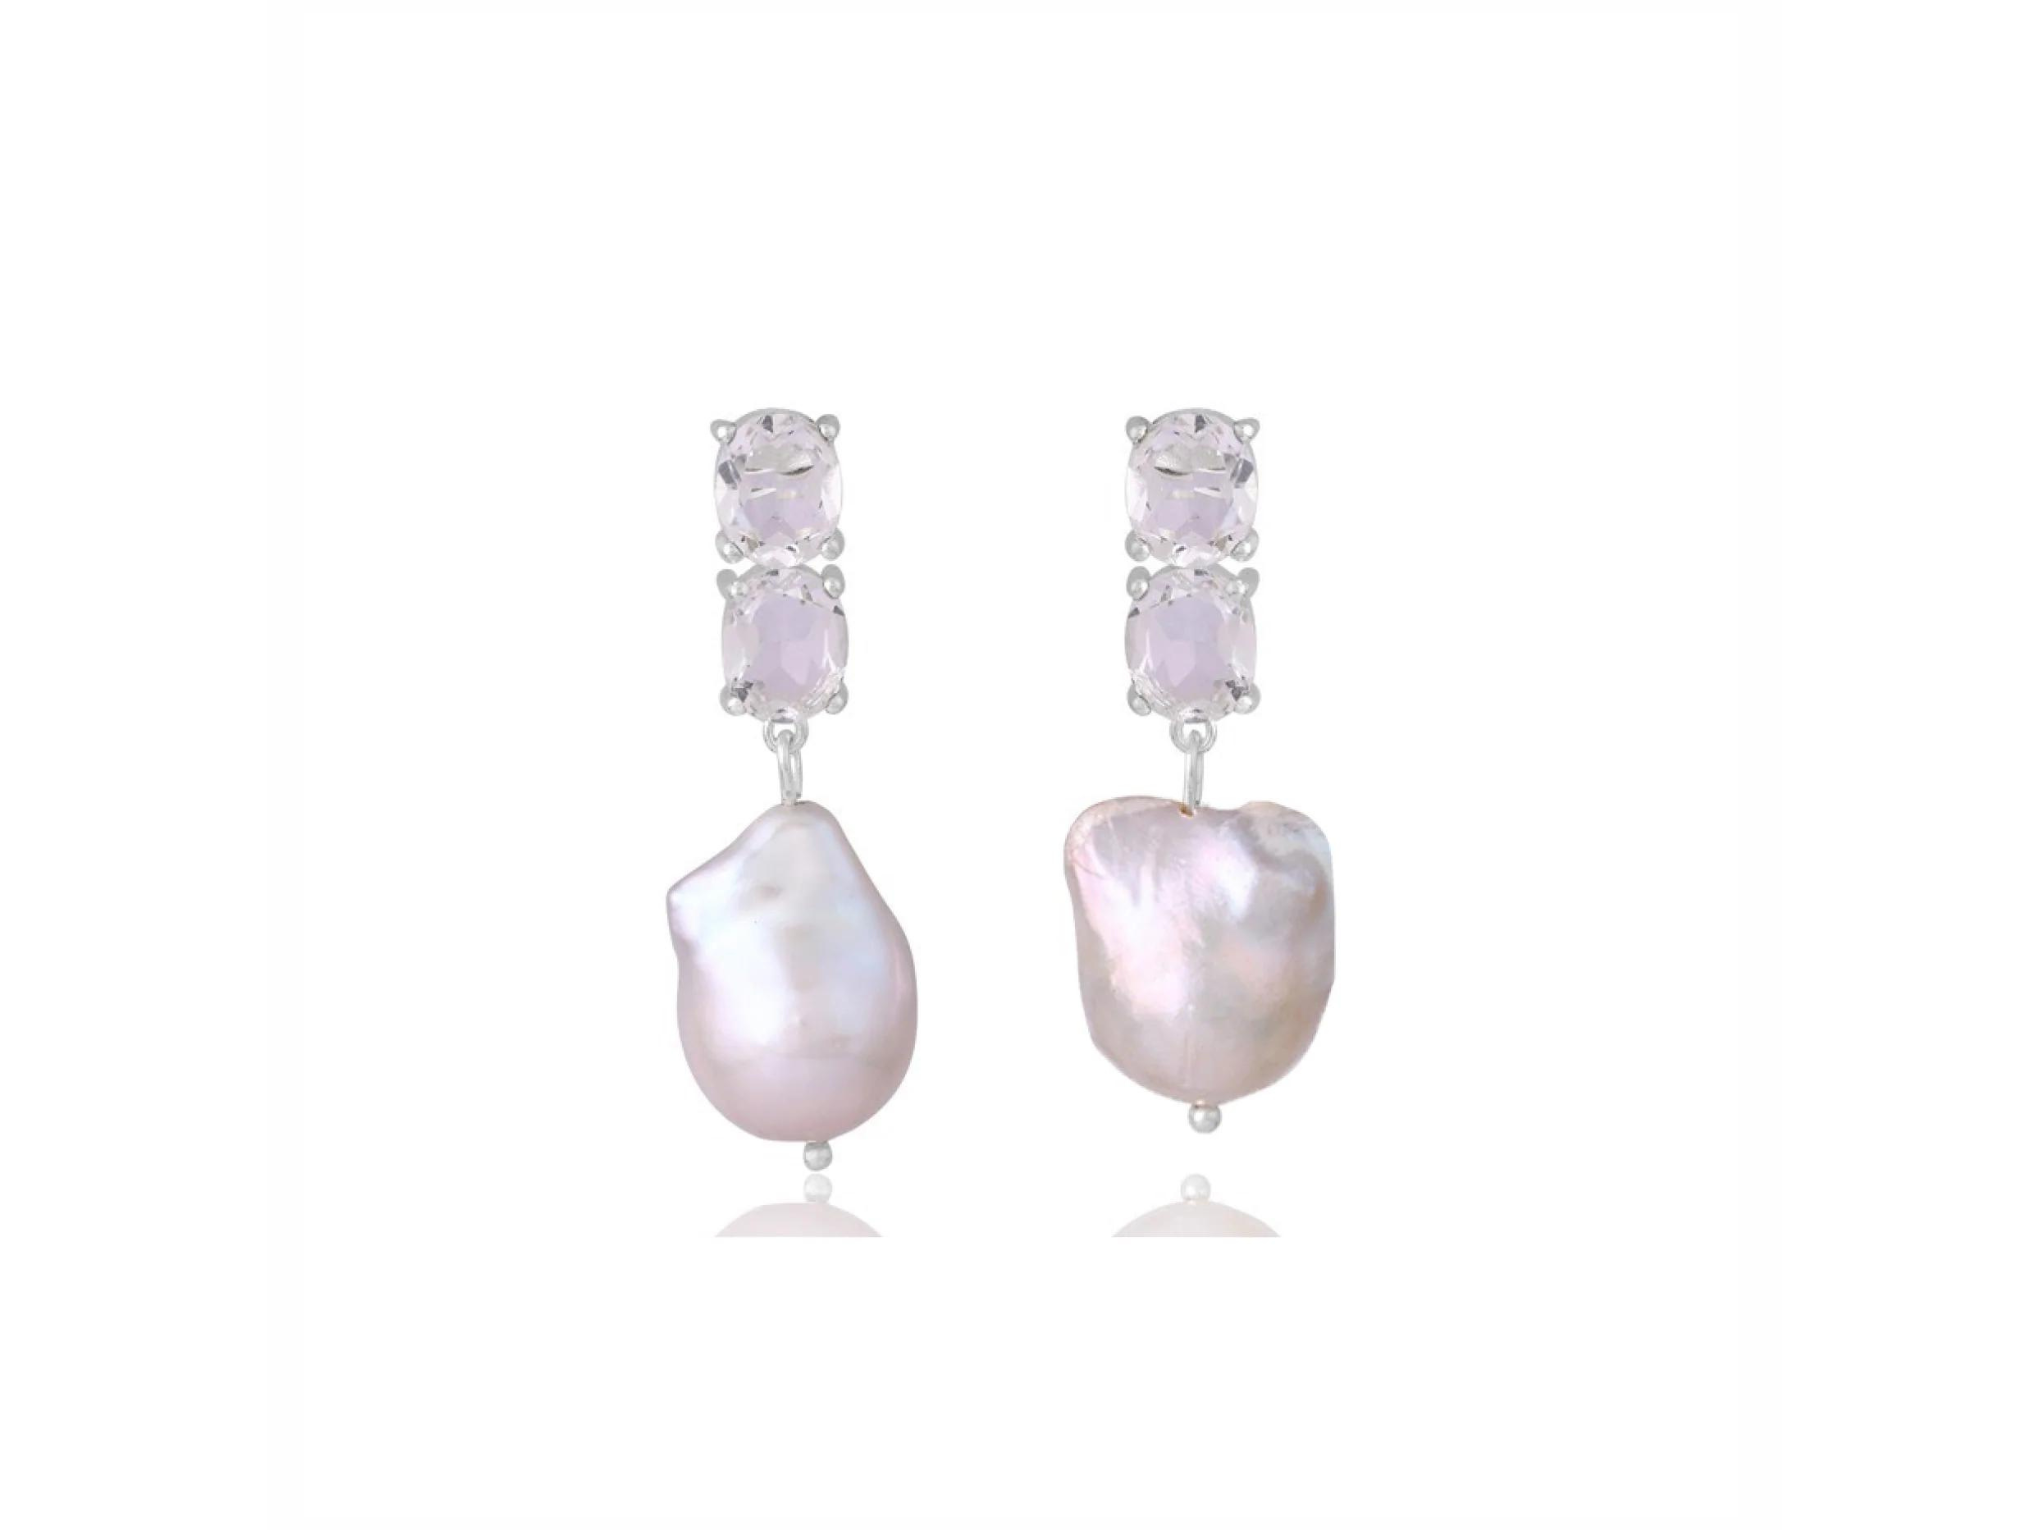 Aggregate 208+ large pearl dangle earrings super hot